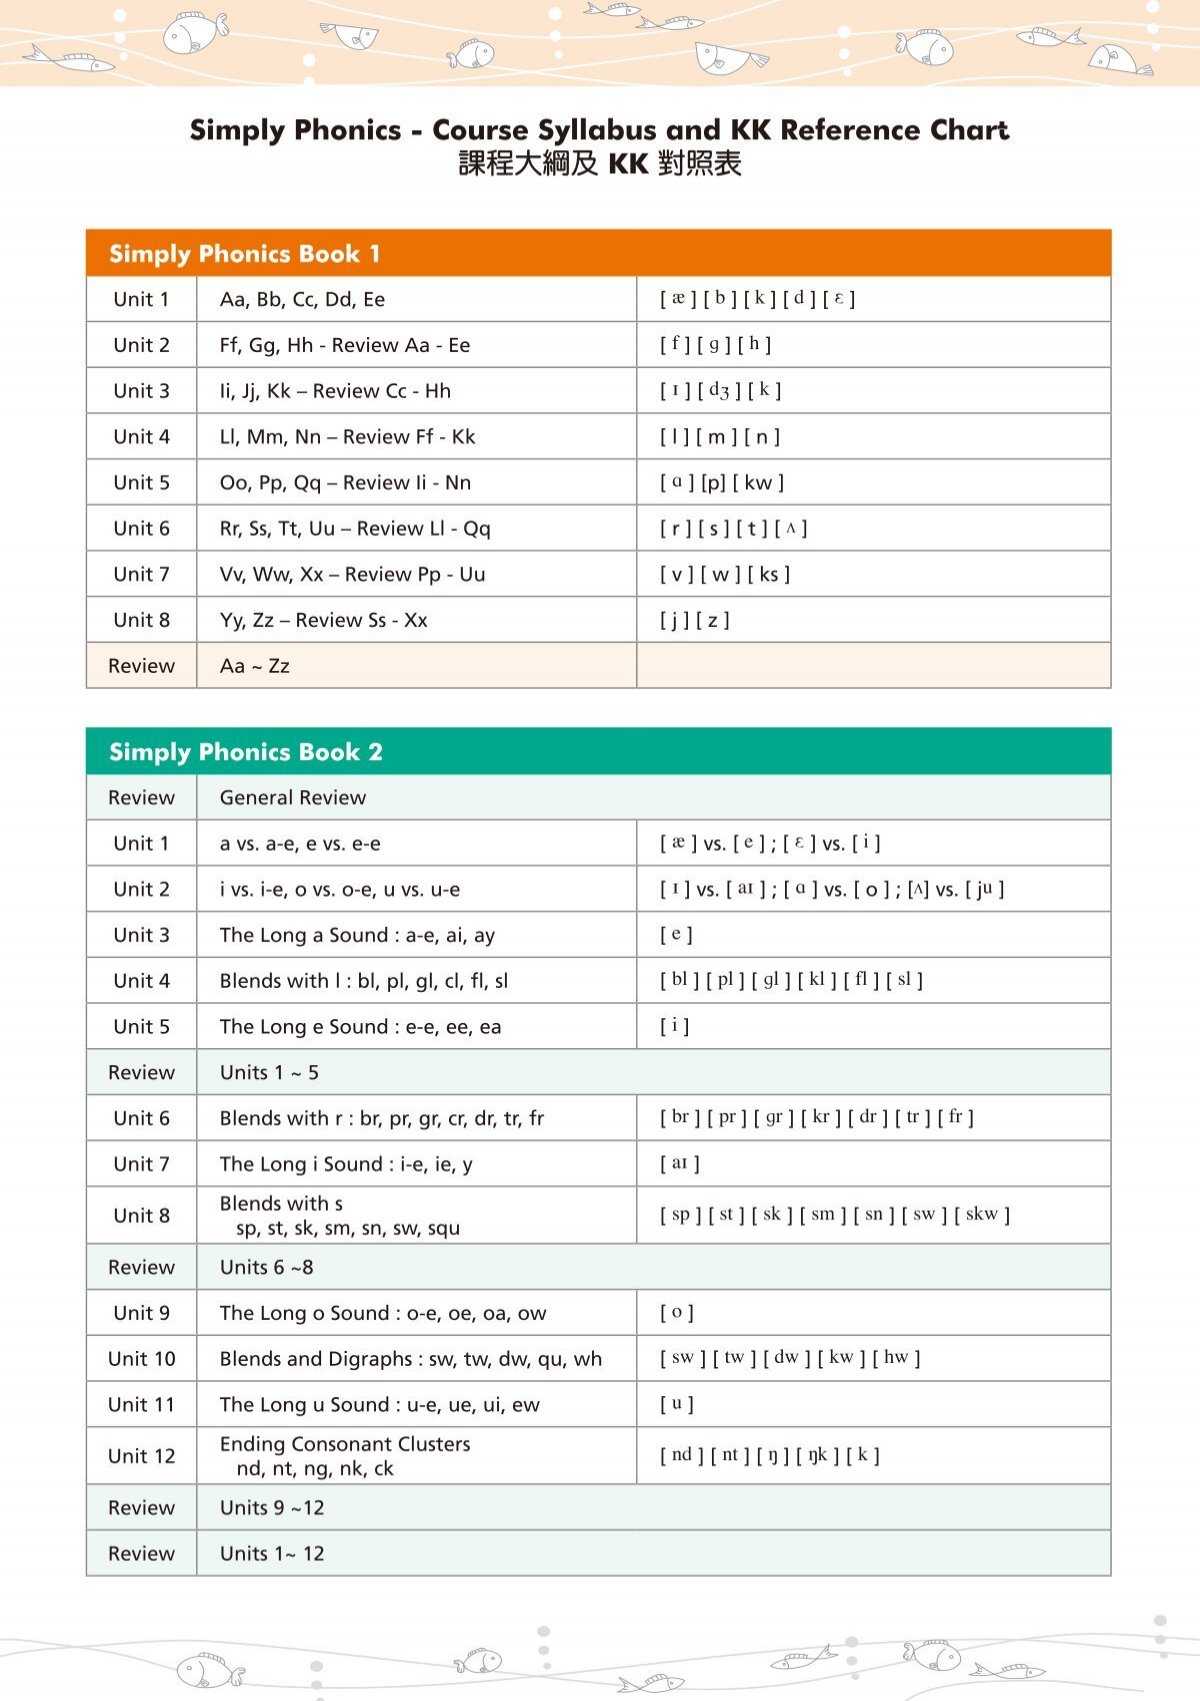 Simply Phonics Course Syllabus And Kk Reference Chart Eª C A C